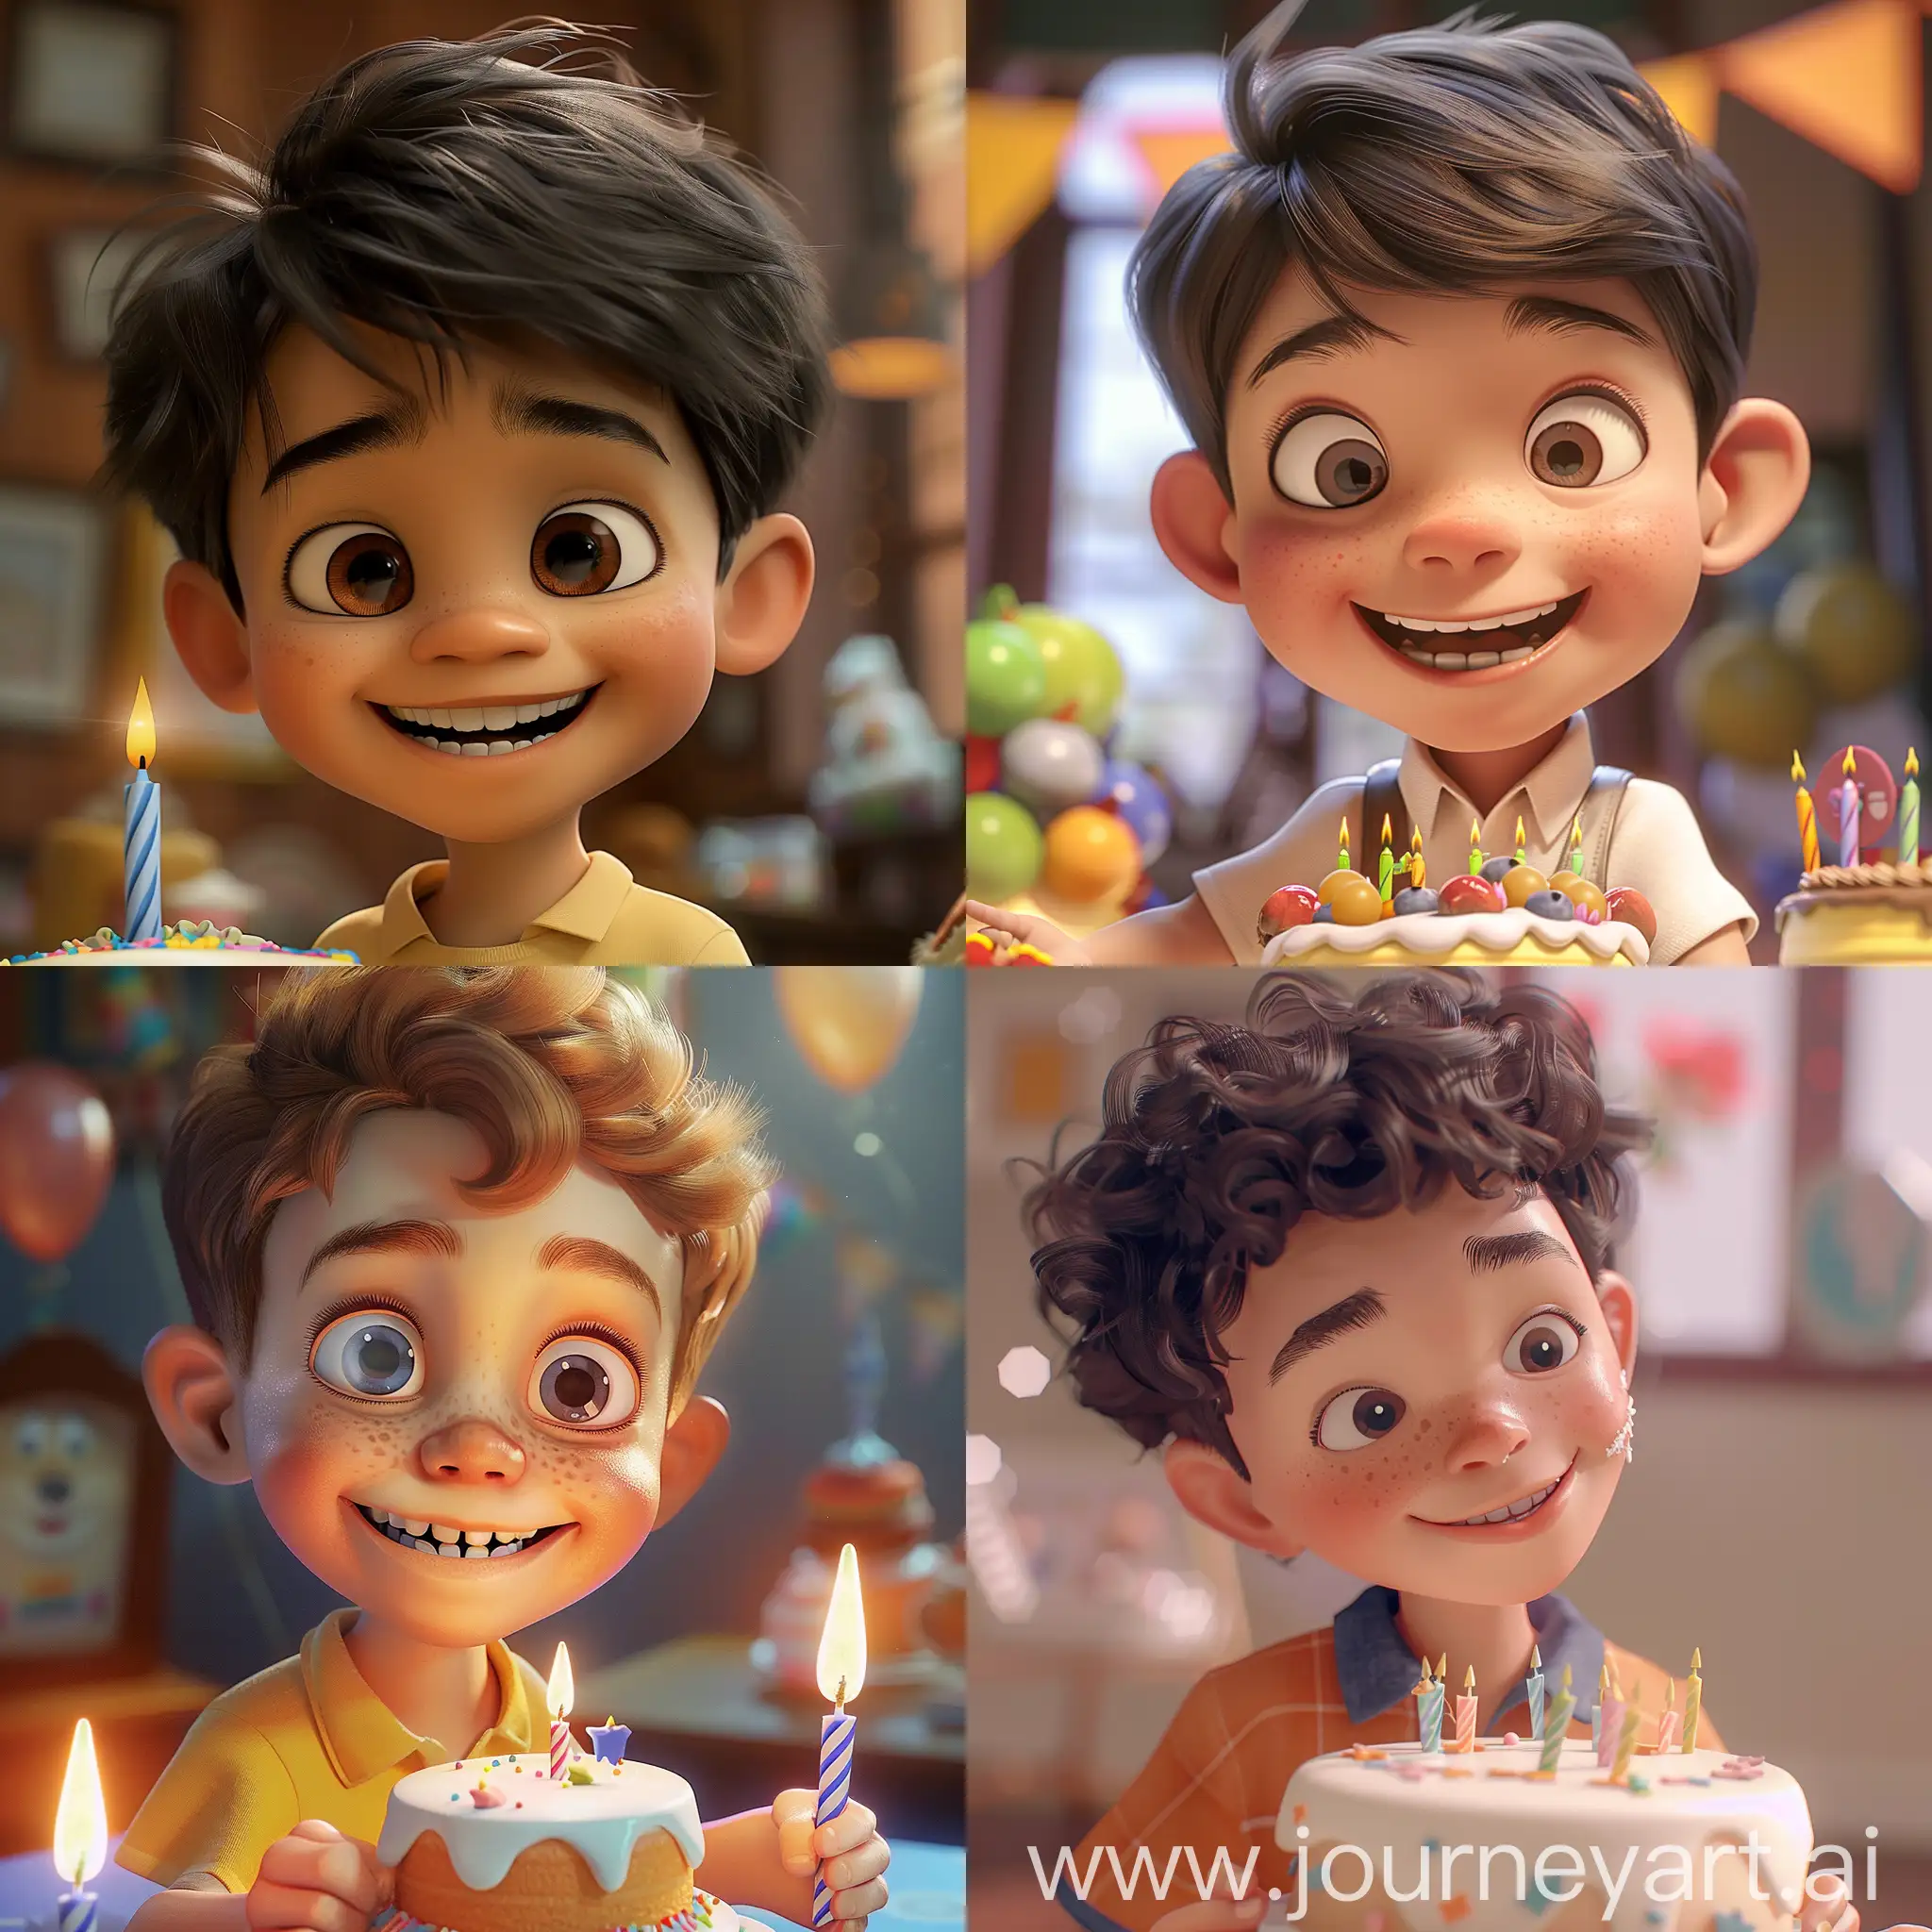 Joyful-Little-Boy-Celebrating-Birthday-with-Cake